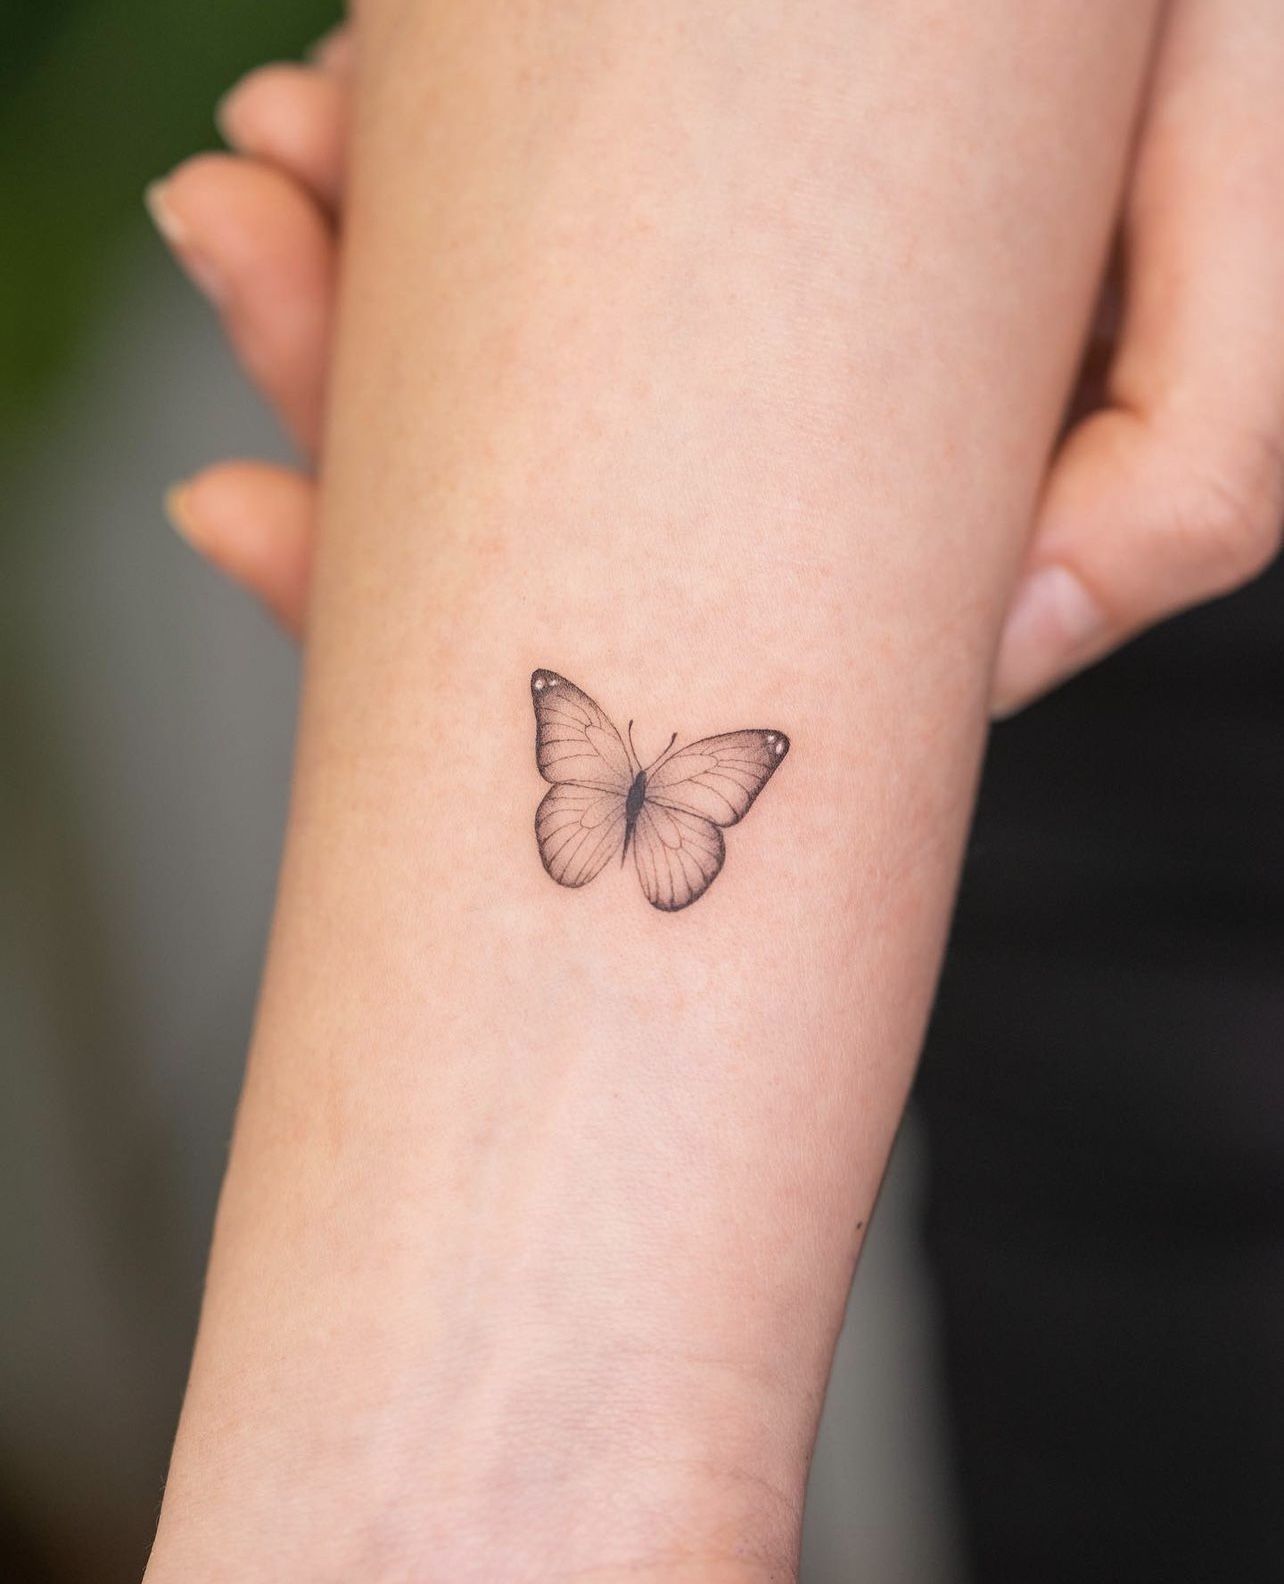 Tatuaje de mariposa en el brazo